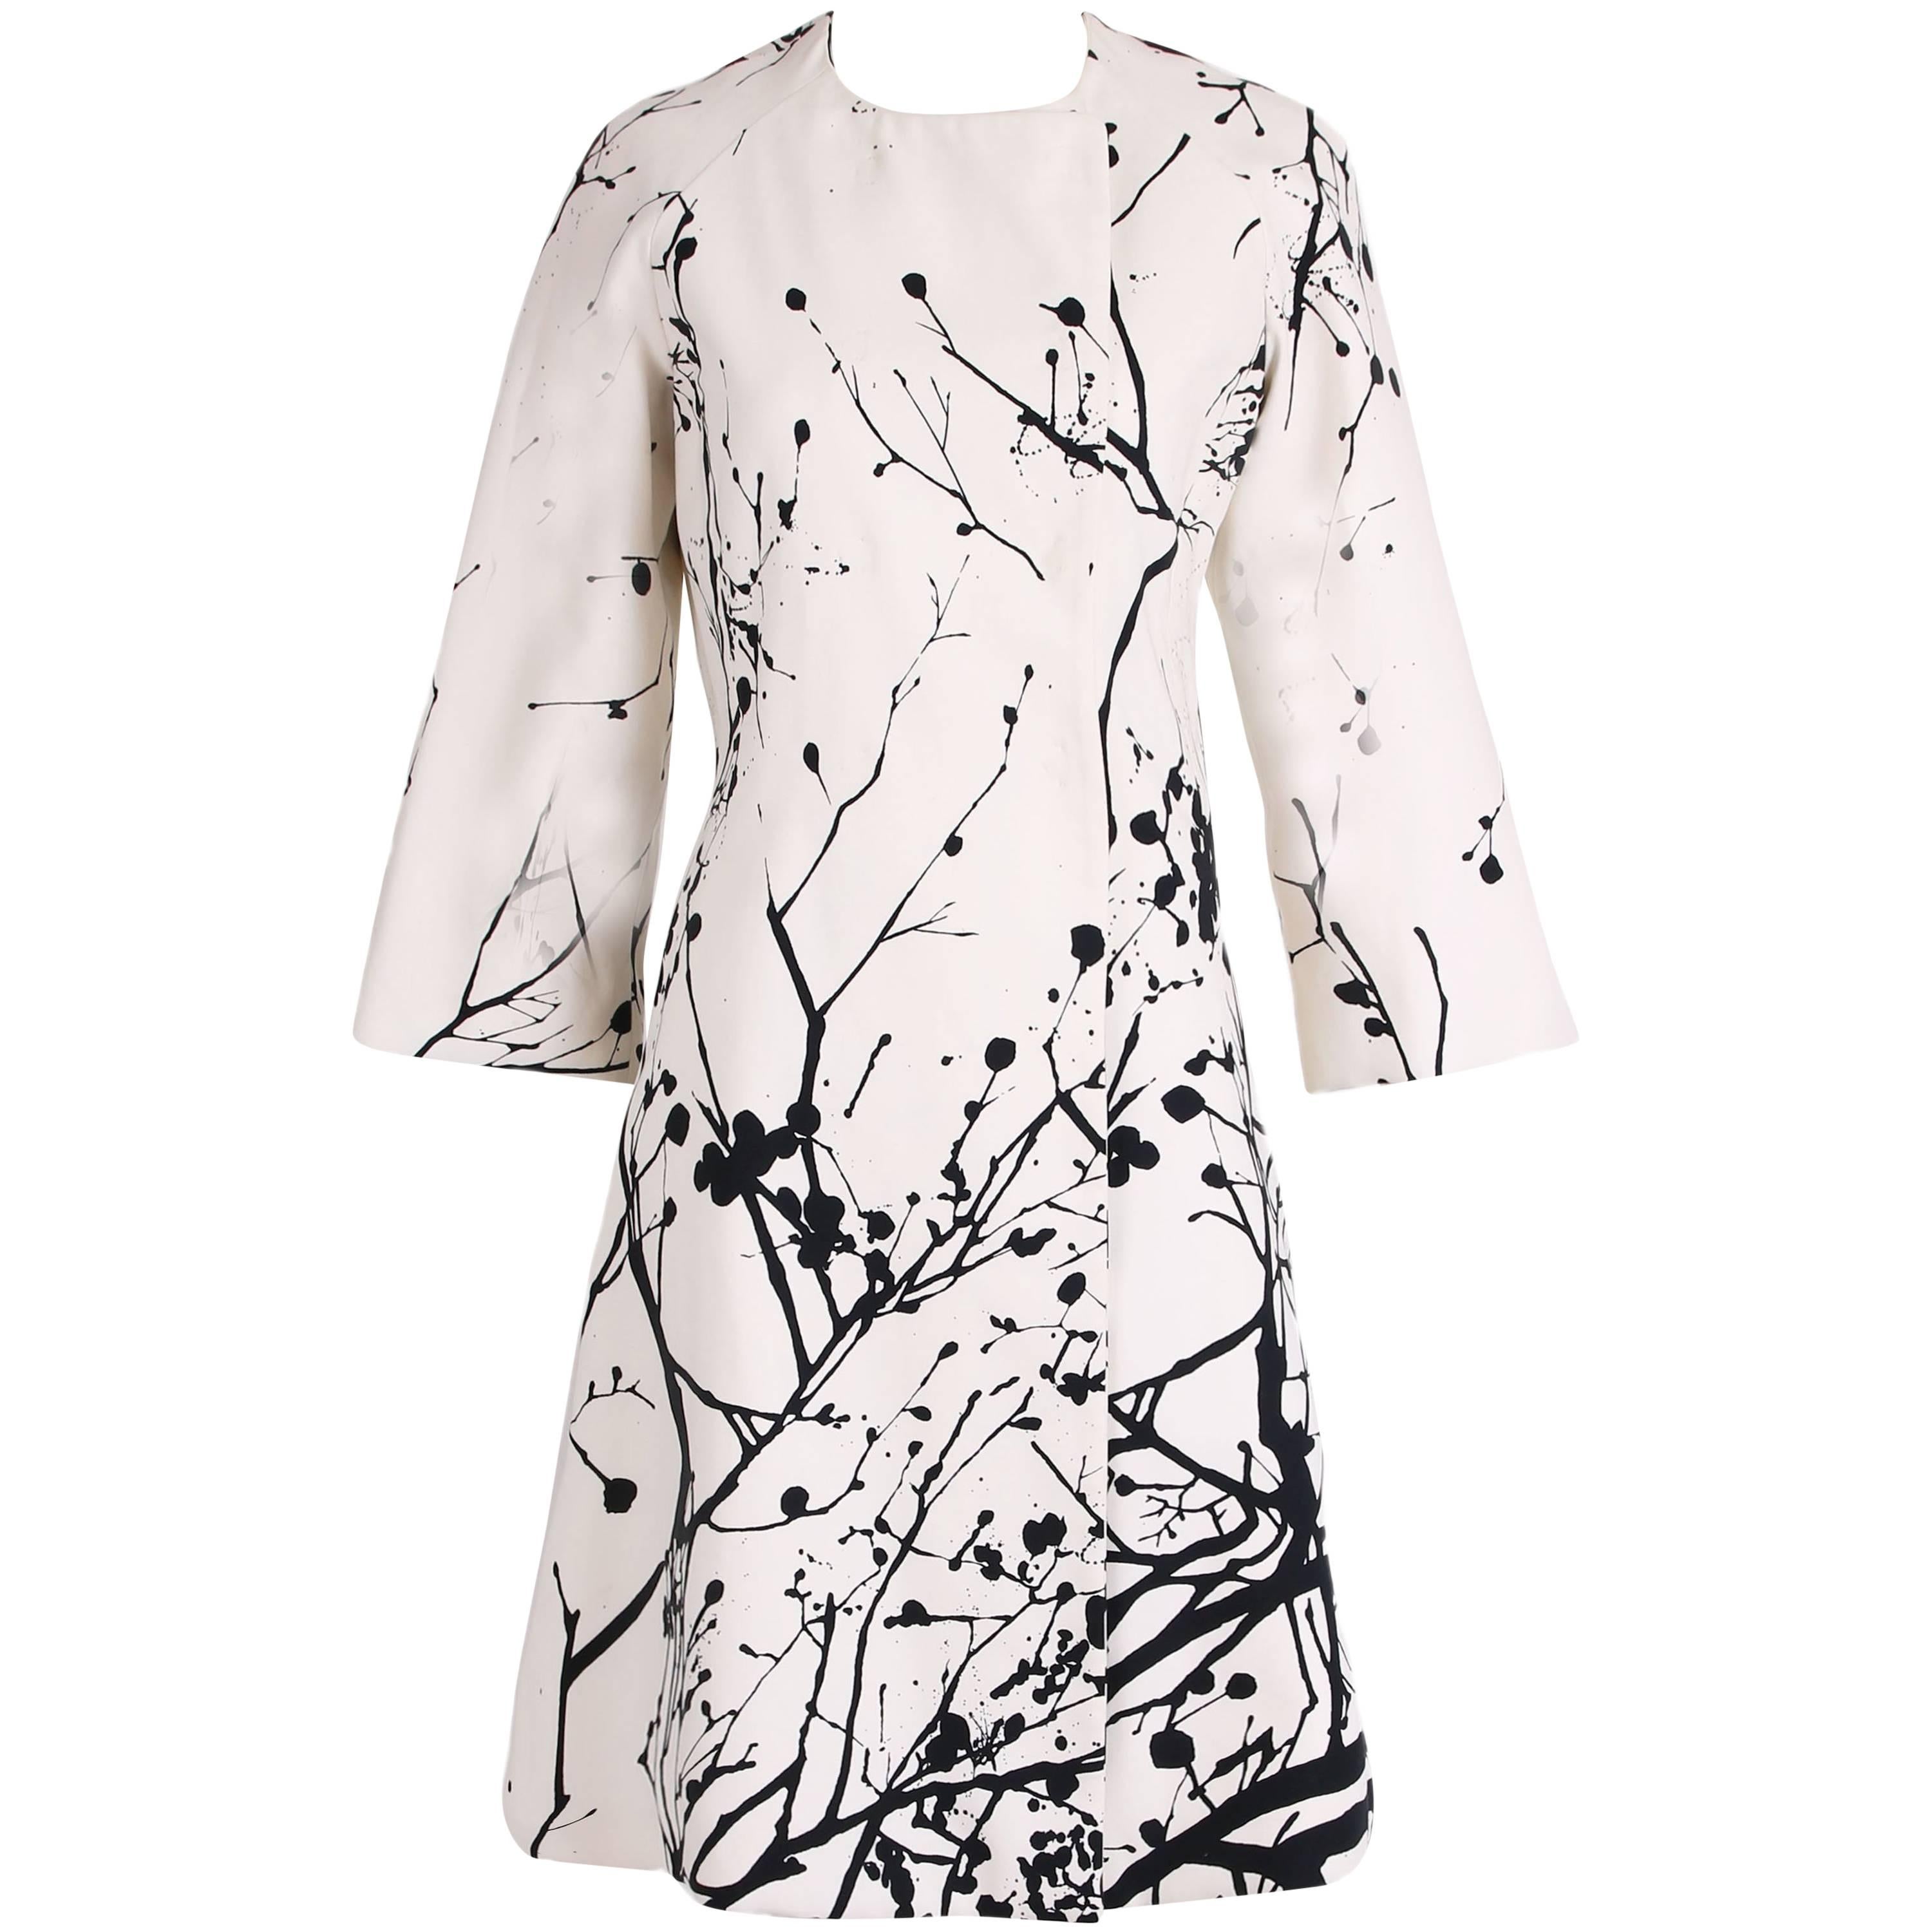 Tuleh Black & White Abstract Splatter Print Coat with 3/4 Sleeves